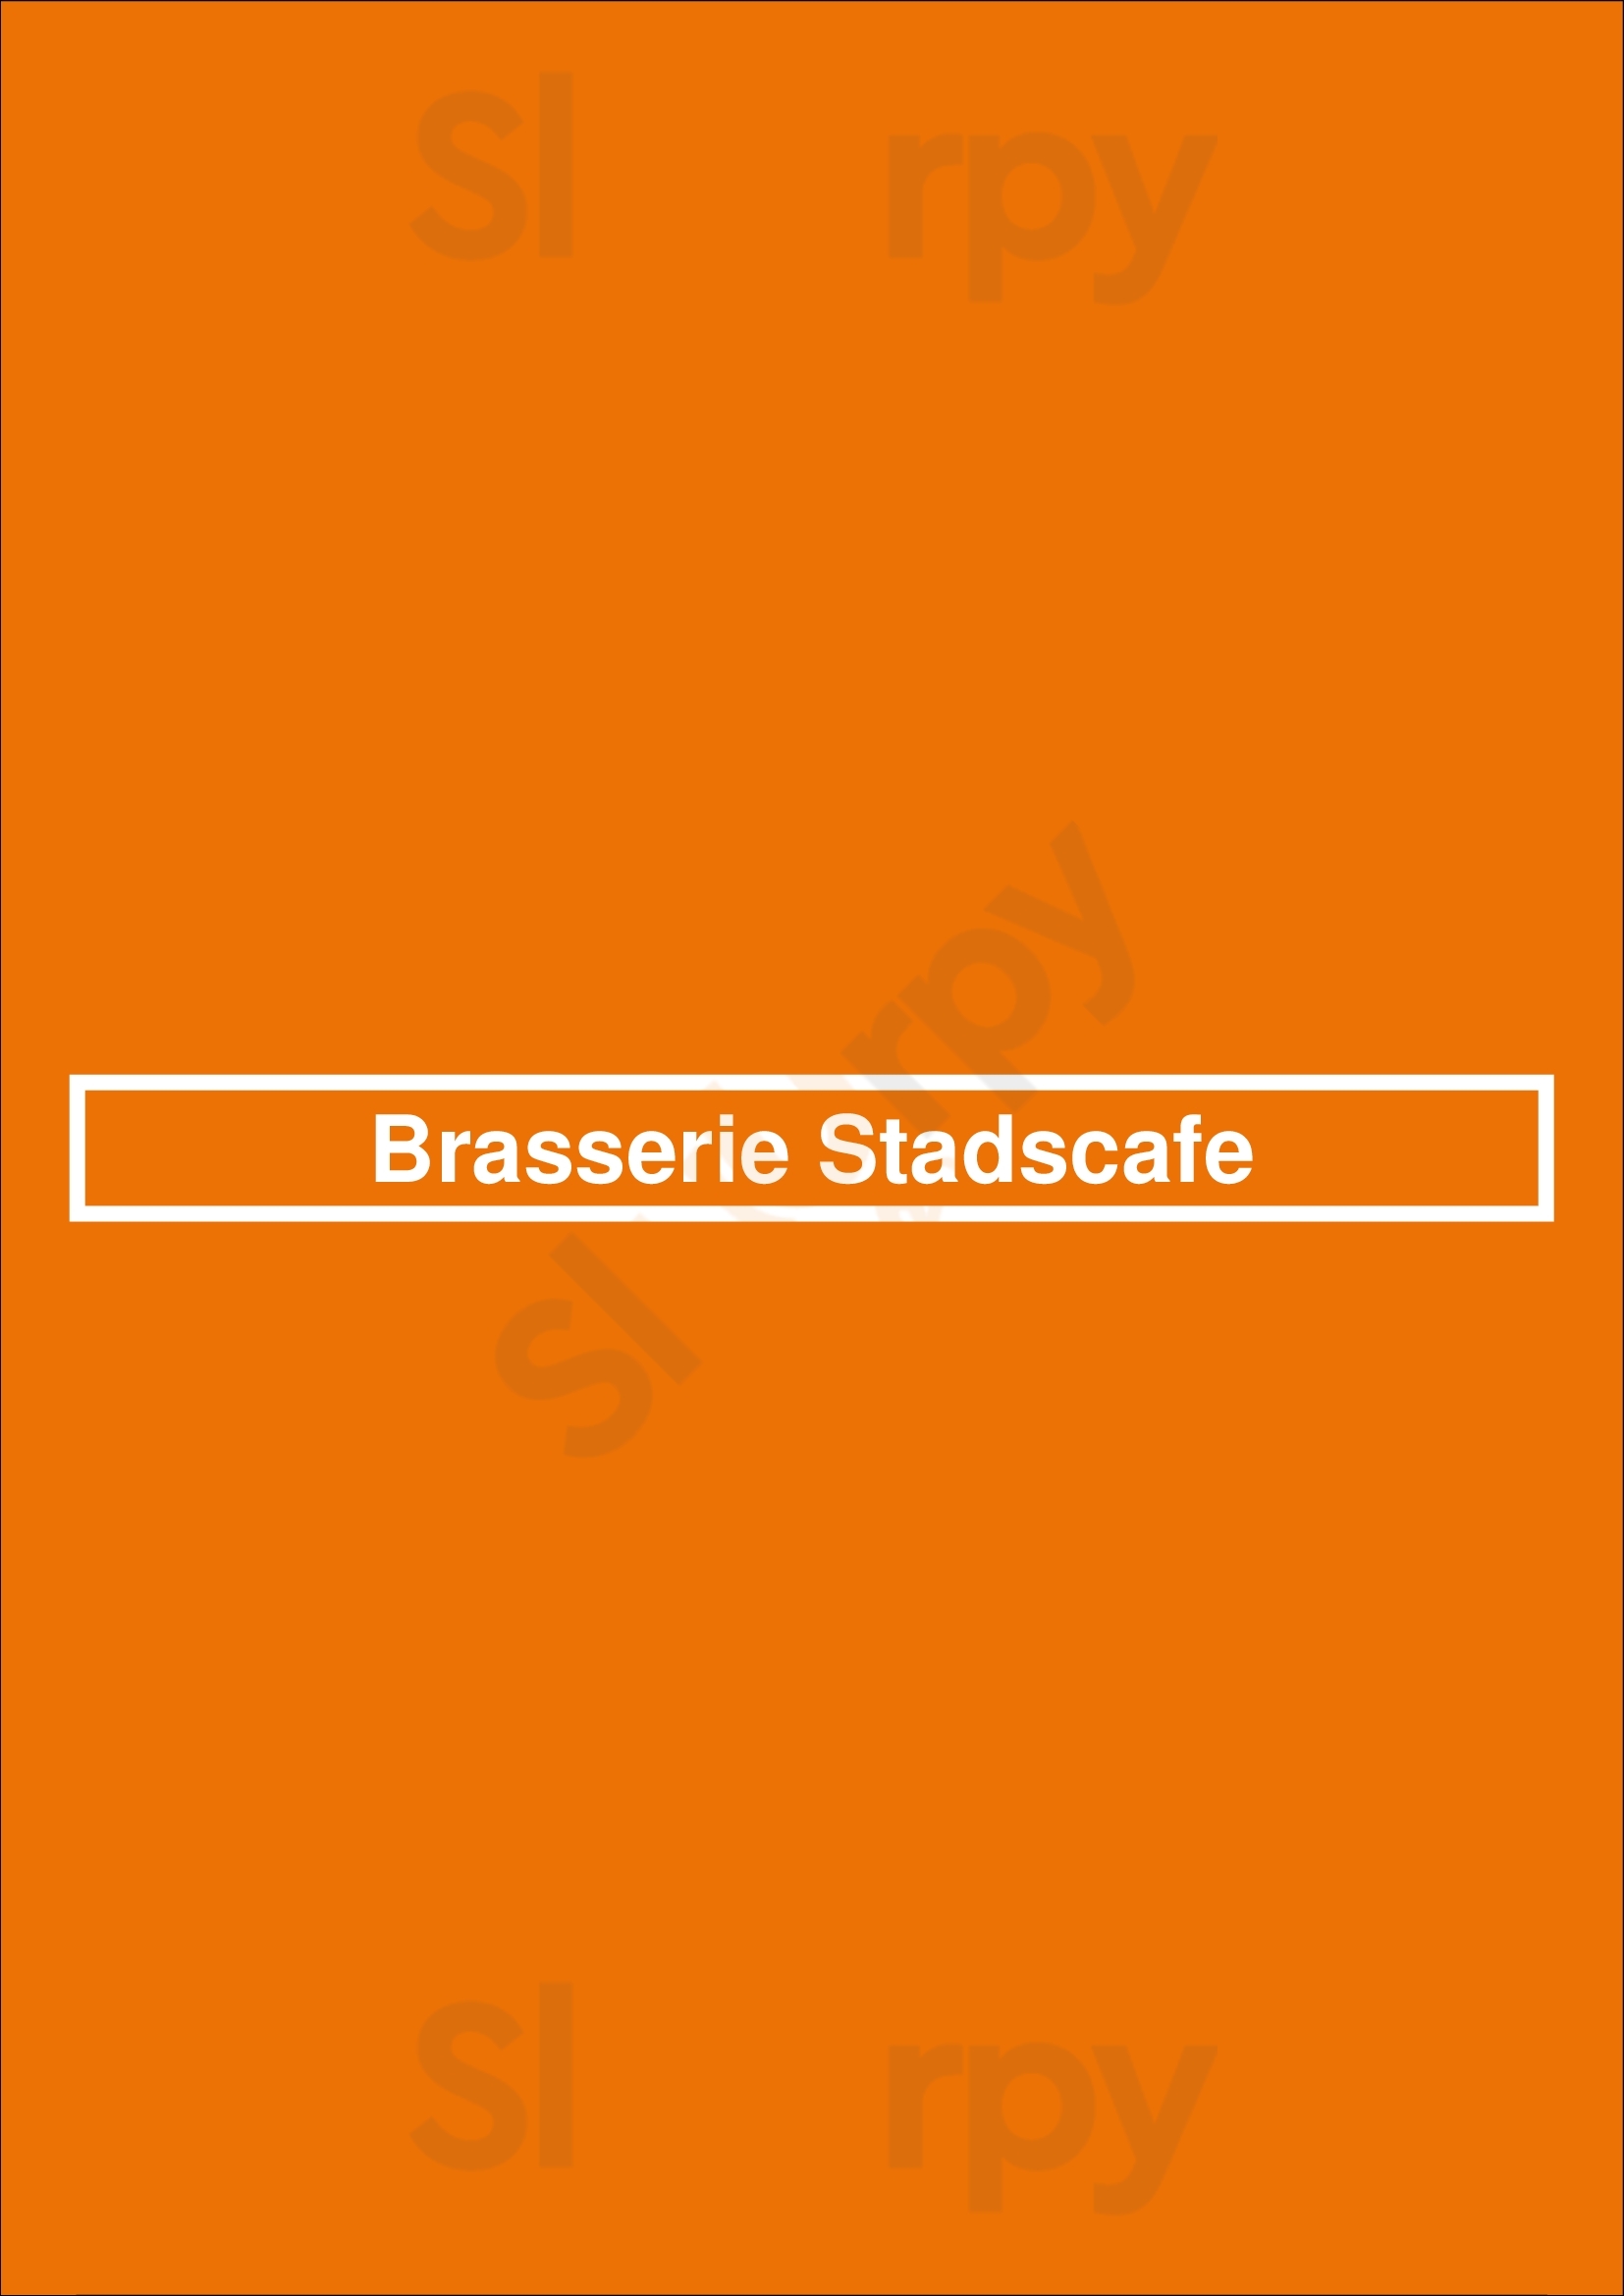 Brasserie Stadscafe Anvers Menu - 1